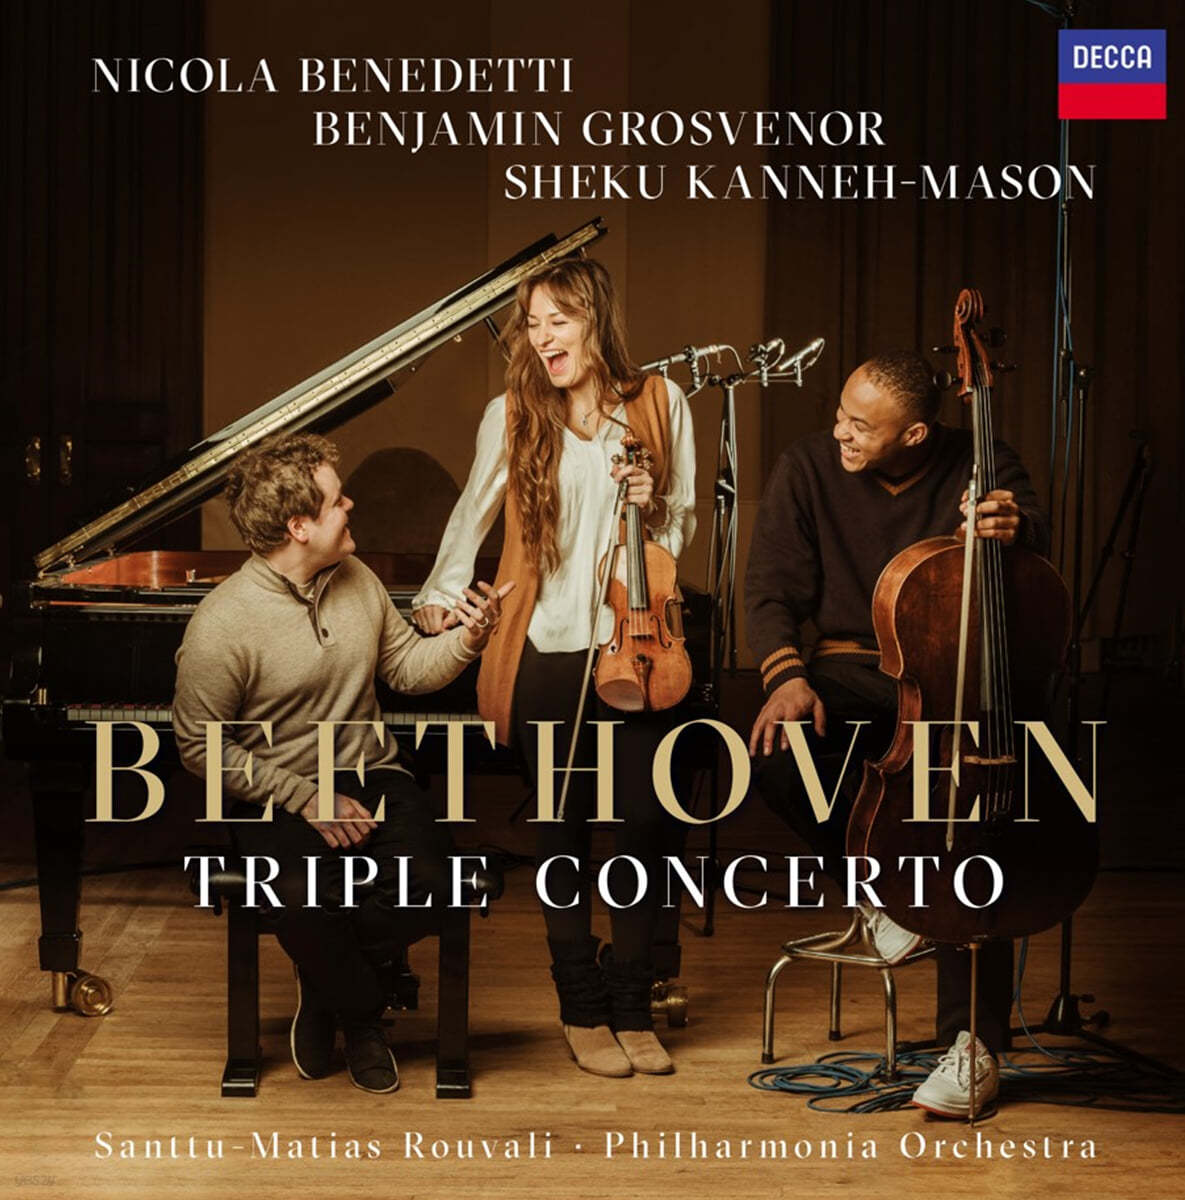 Nicola Benedetti / Benjamin Grosvenor / Sheku Kanneh-Mason 베토벤: 3중 협주곡 (Beethoven: Triple Concerto)